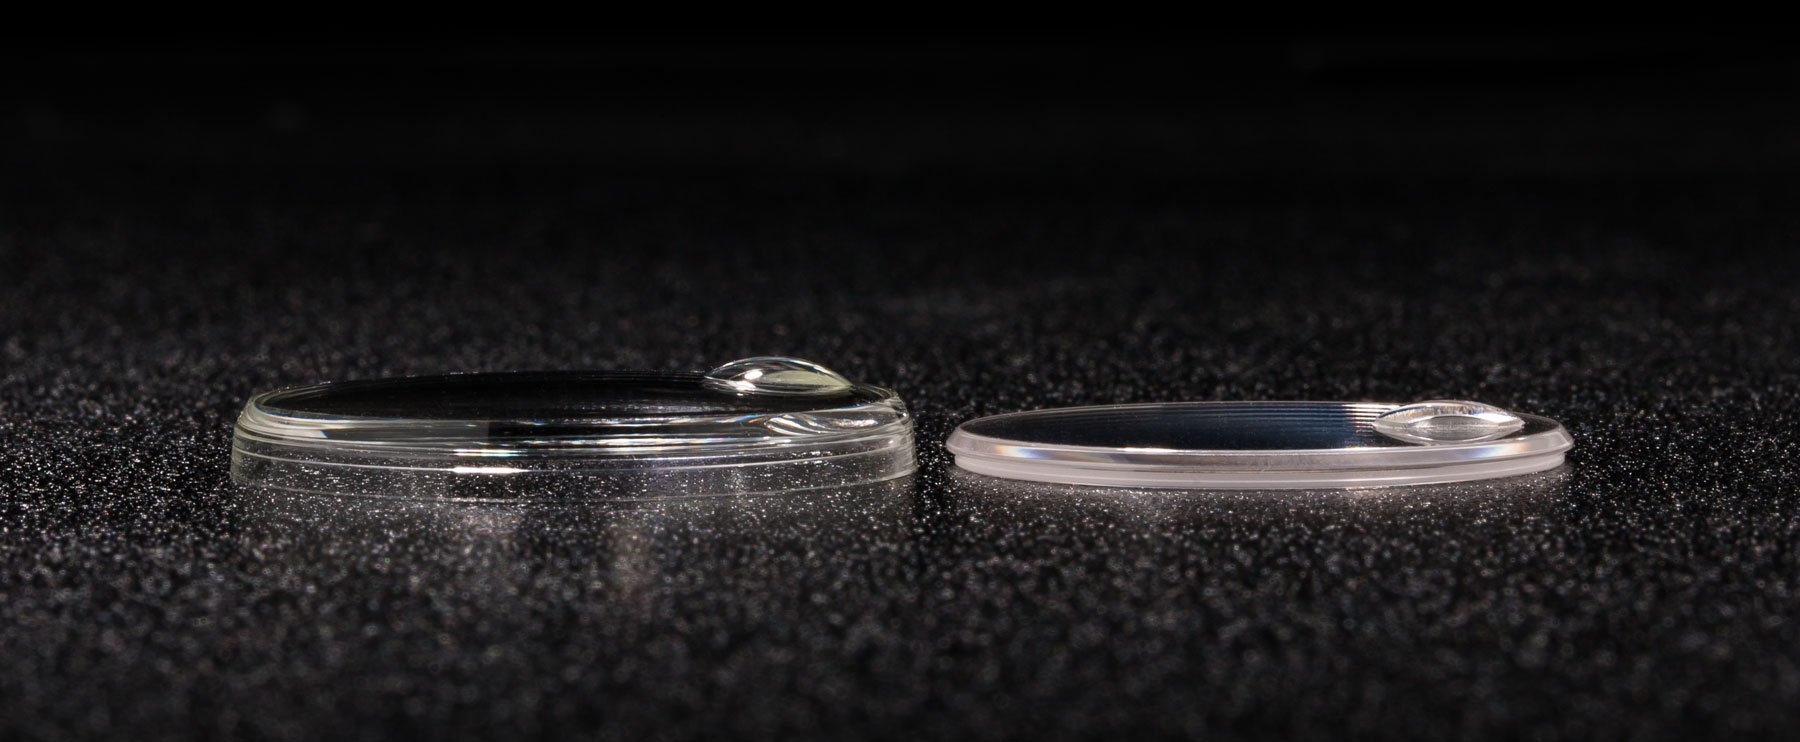 Acrylic vs sapphire Rolex crystals